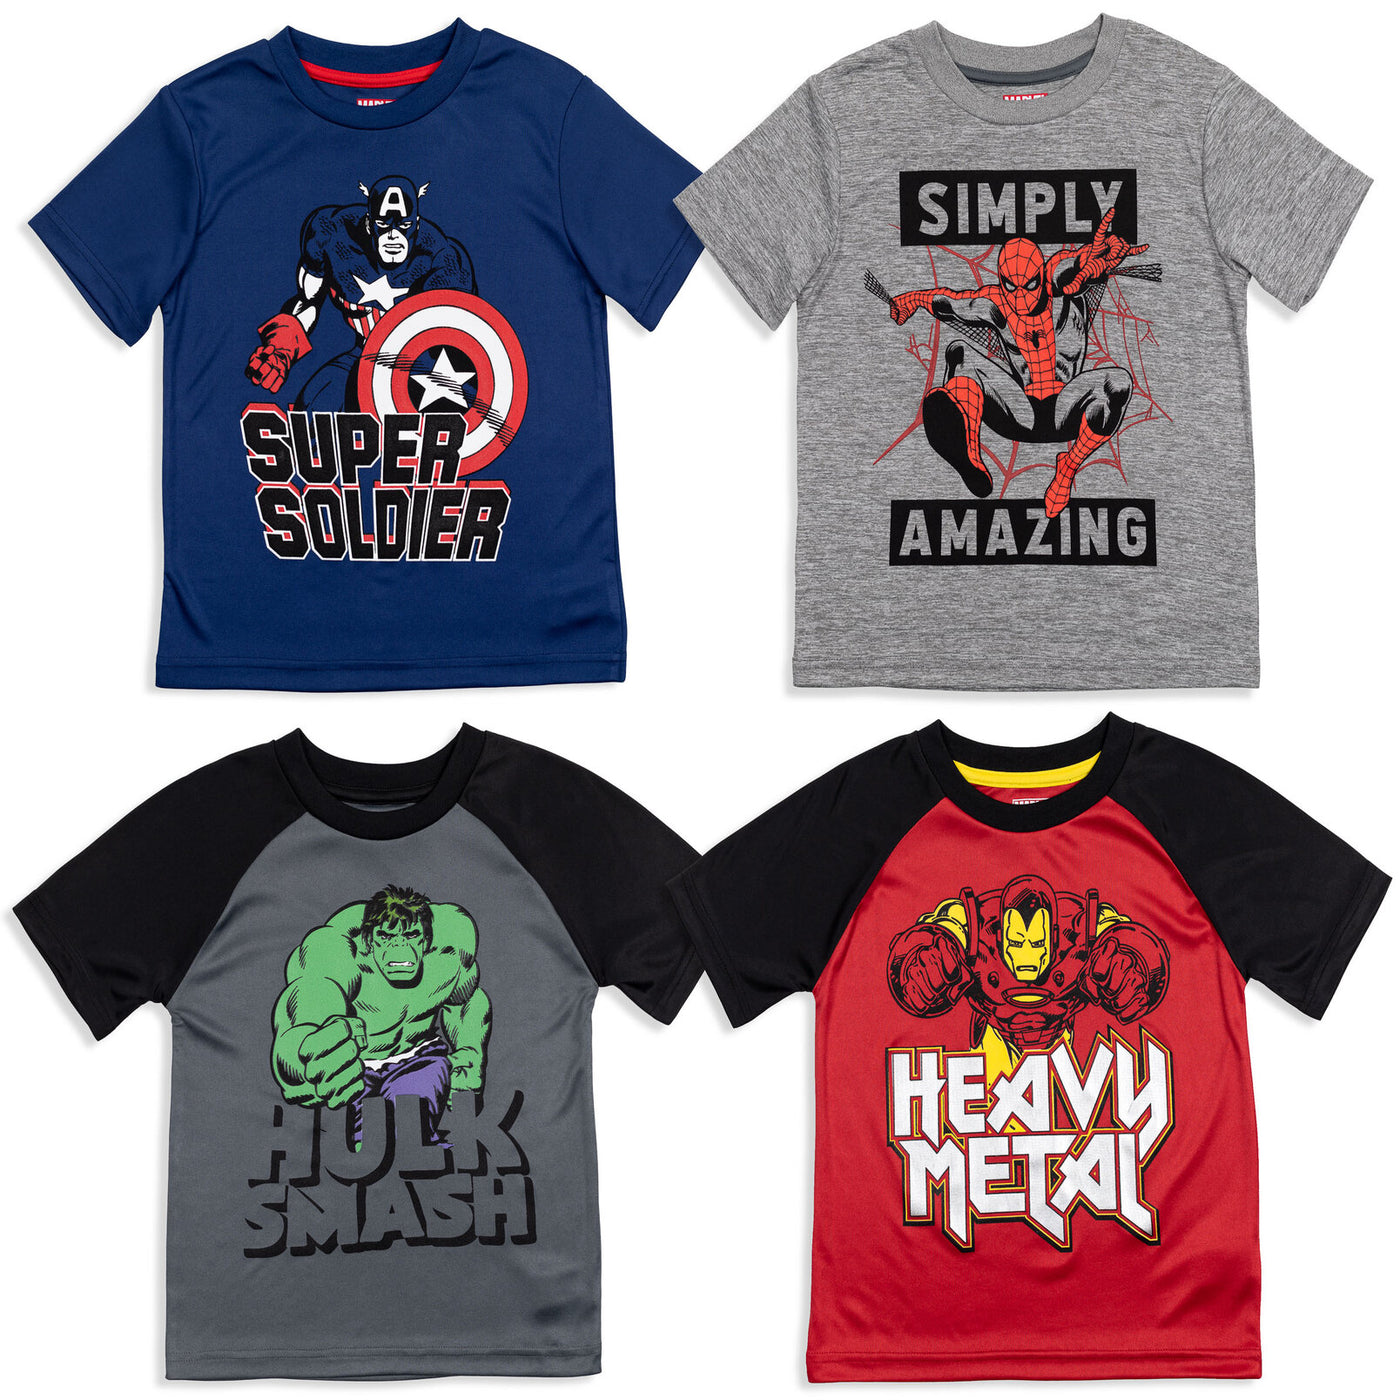 Marvel Avengers 4 Pack Athletic T-Shirts